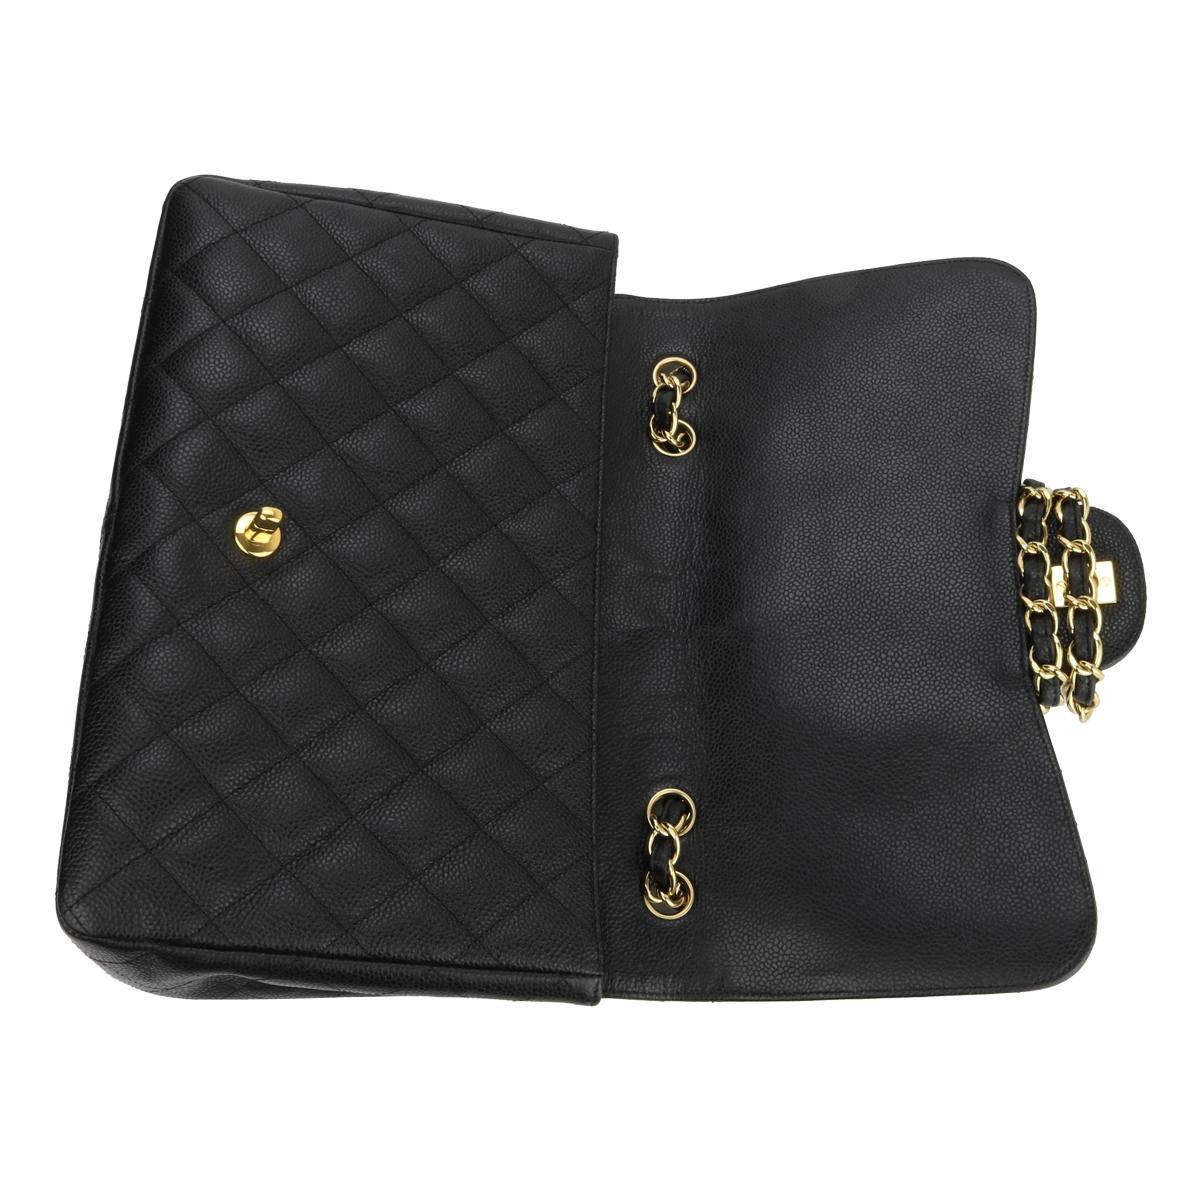 CHANEL Single Flap Jumbo Bag Black Caviar with Gold Hardware 2010 9